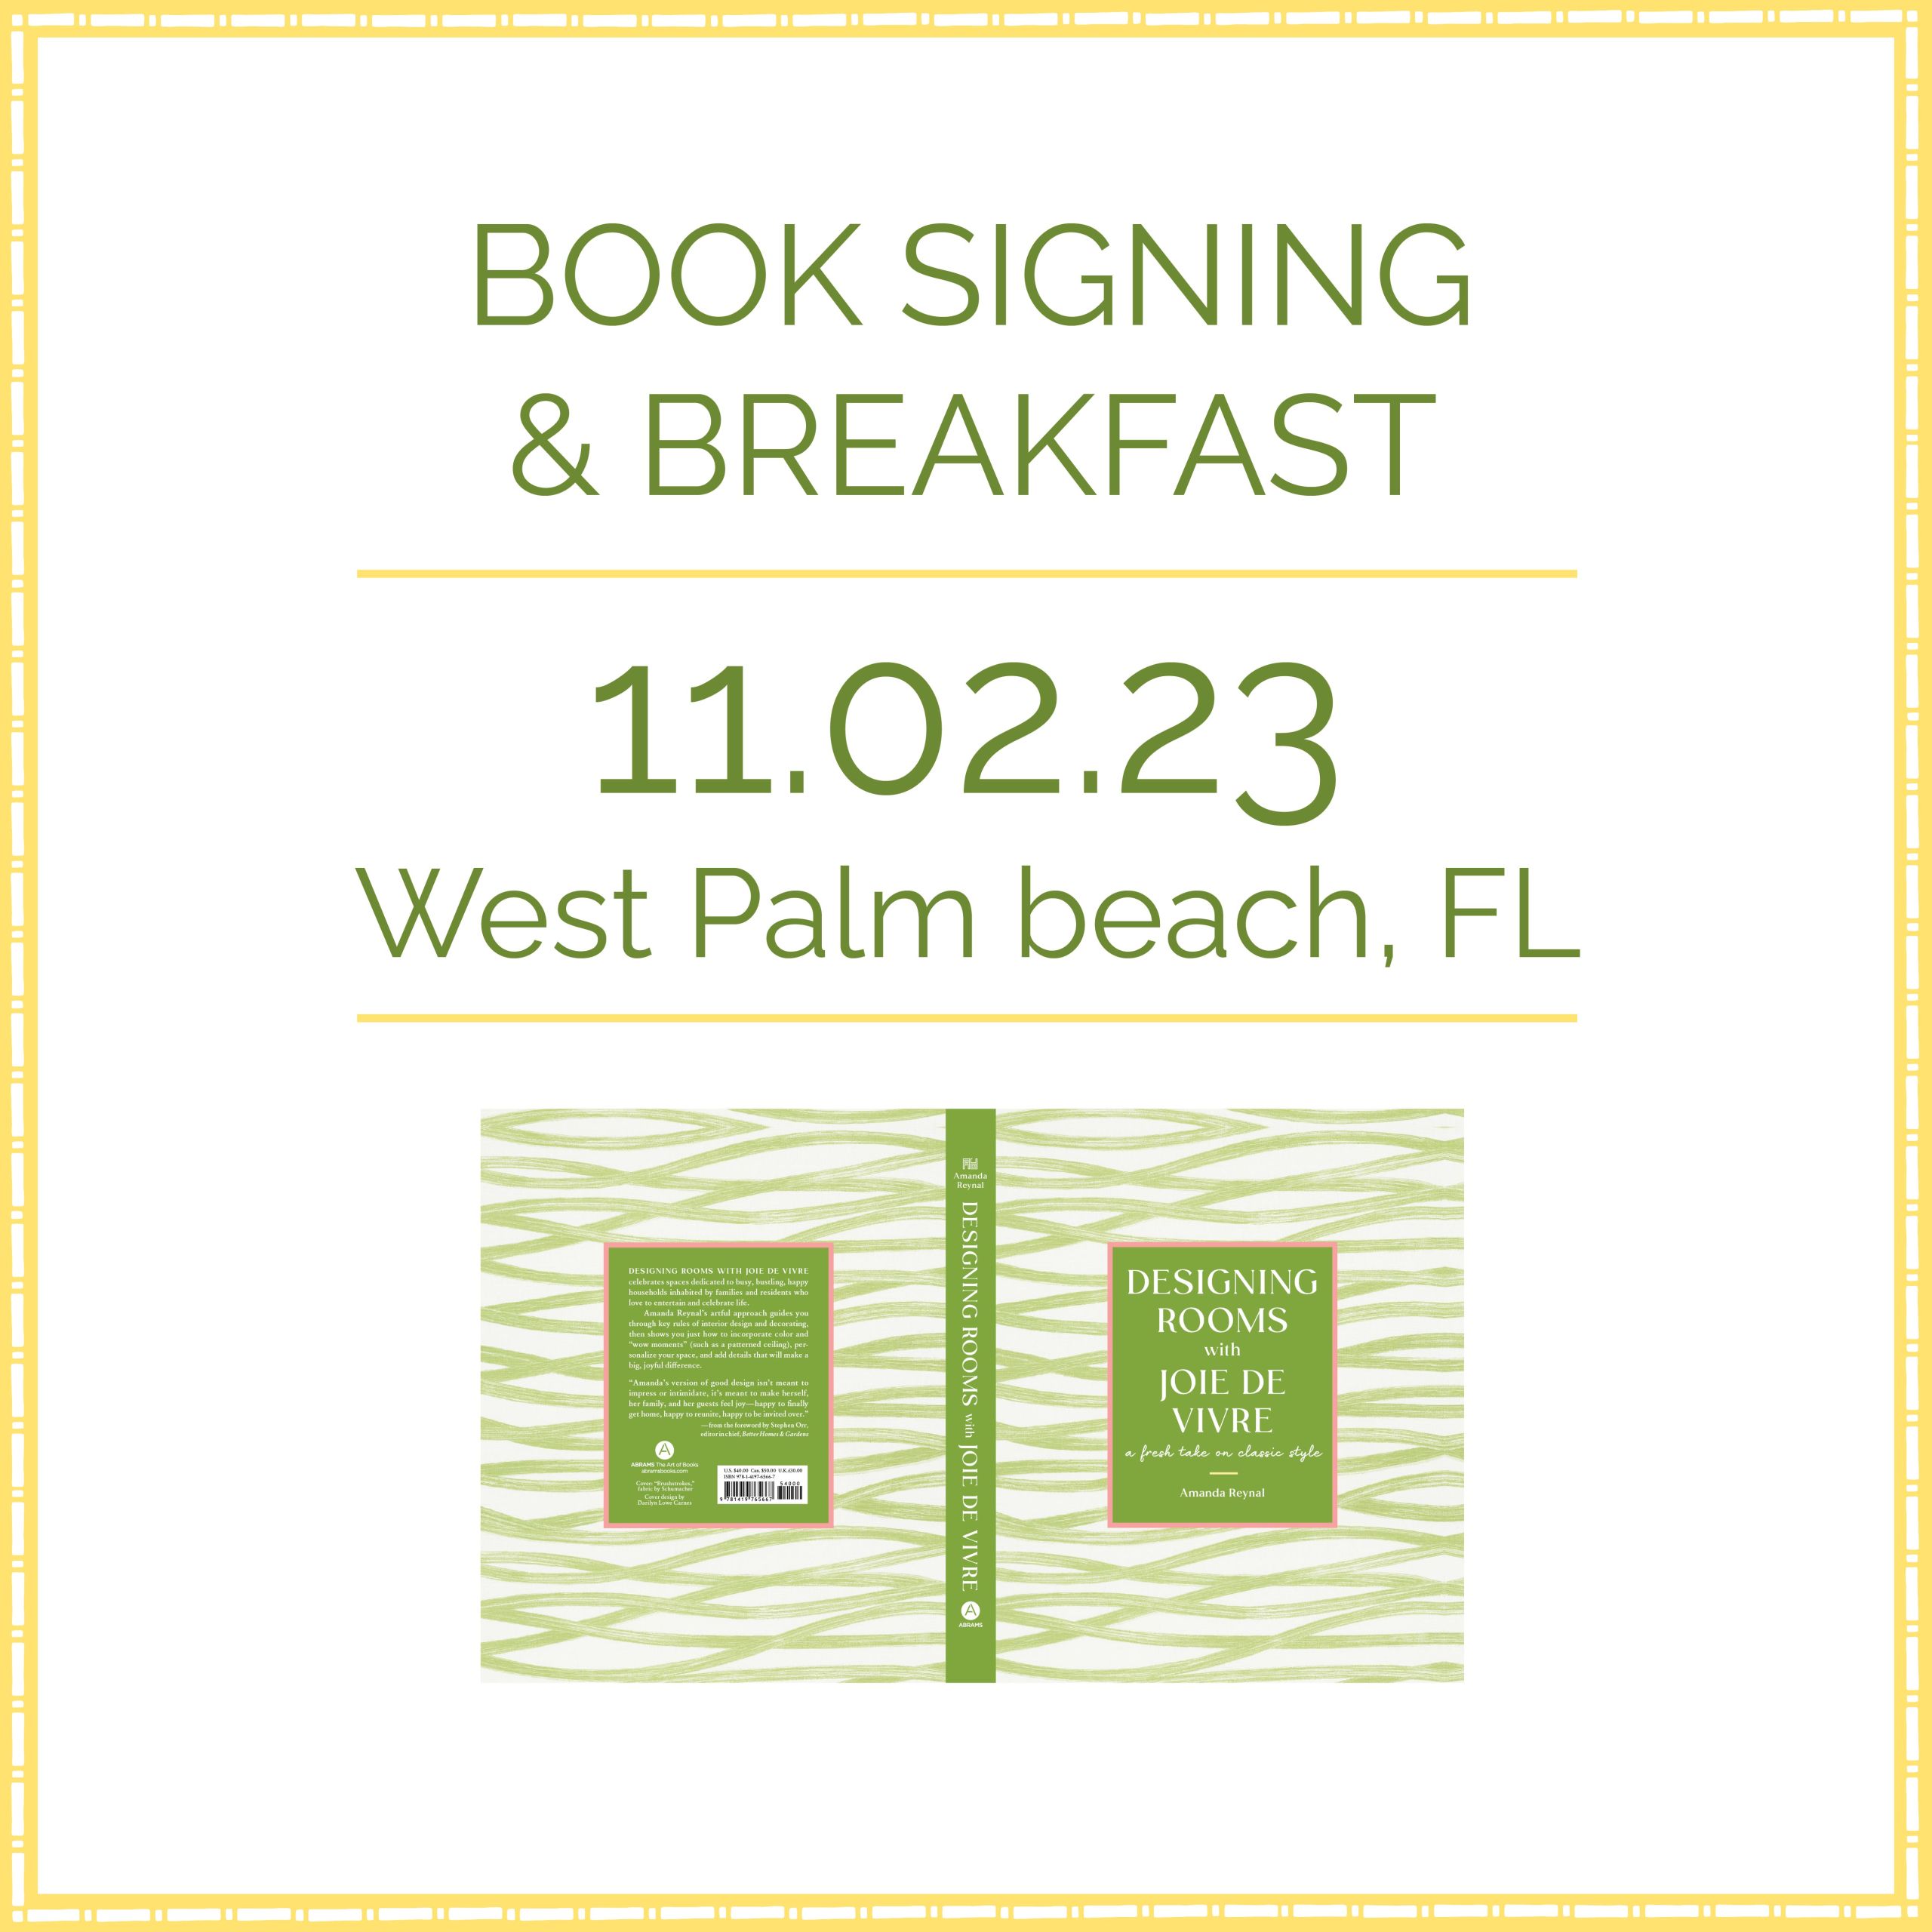 Book Signing & Breakfast